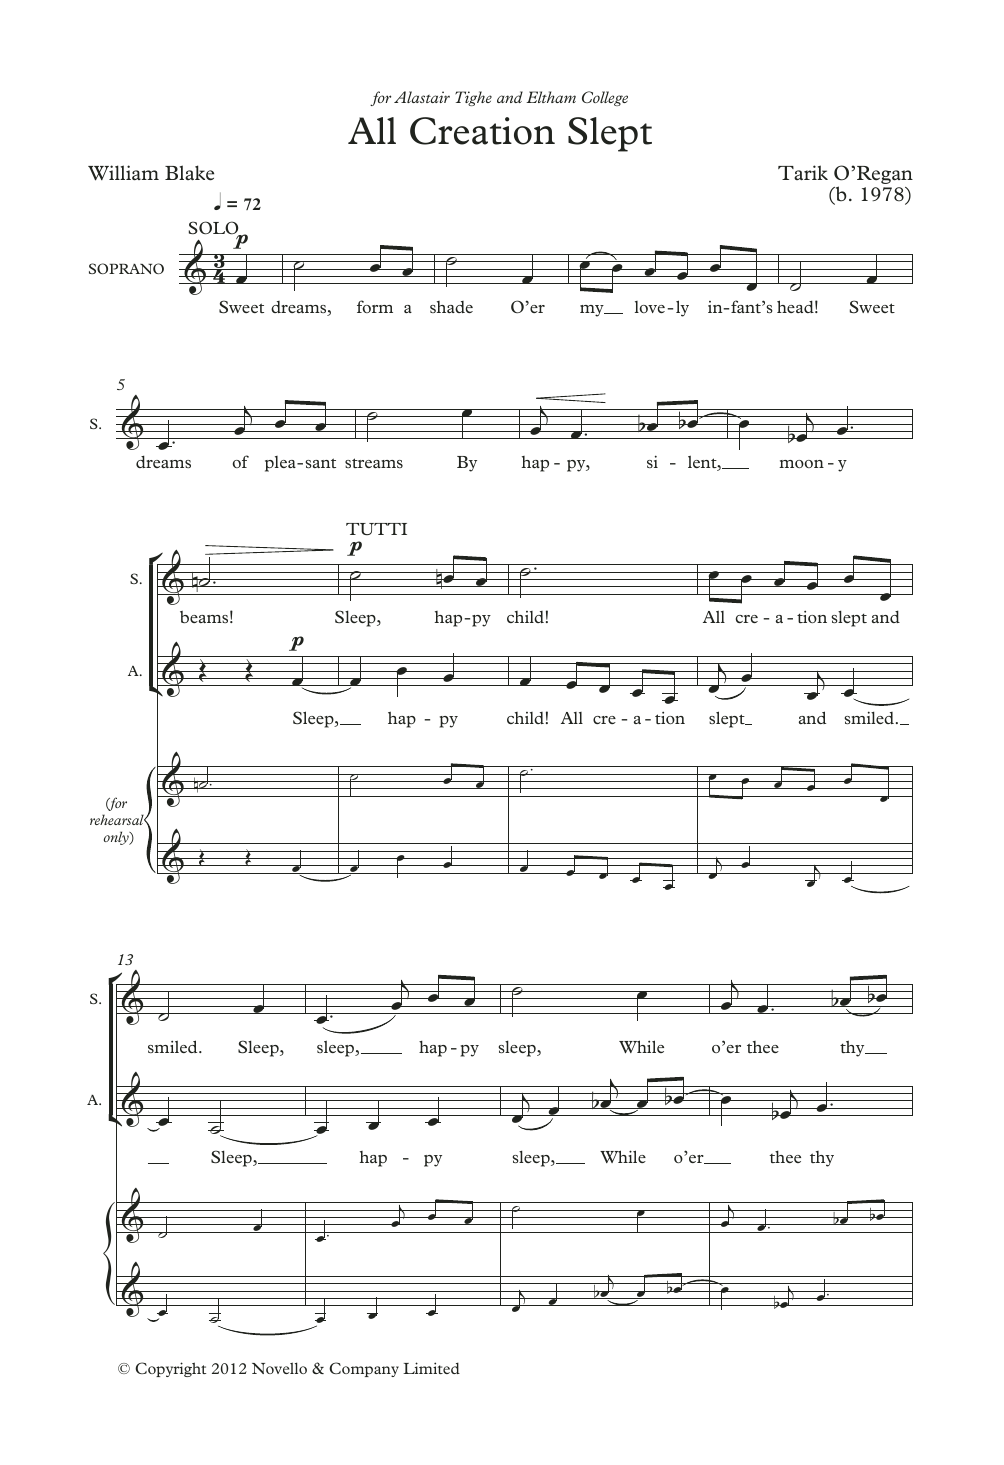 Tarik O'Regan All Creation Slept Sheet Music Notes & Chords for SATB Choir - Download or Print PDF